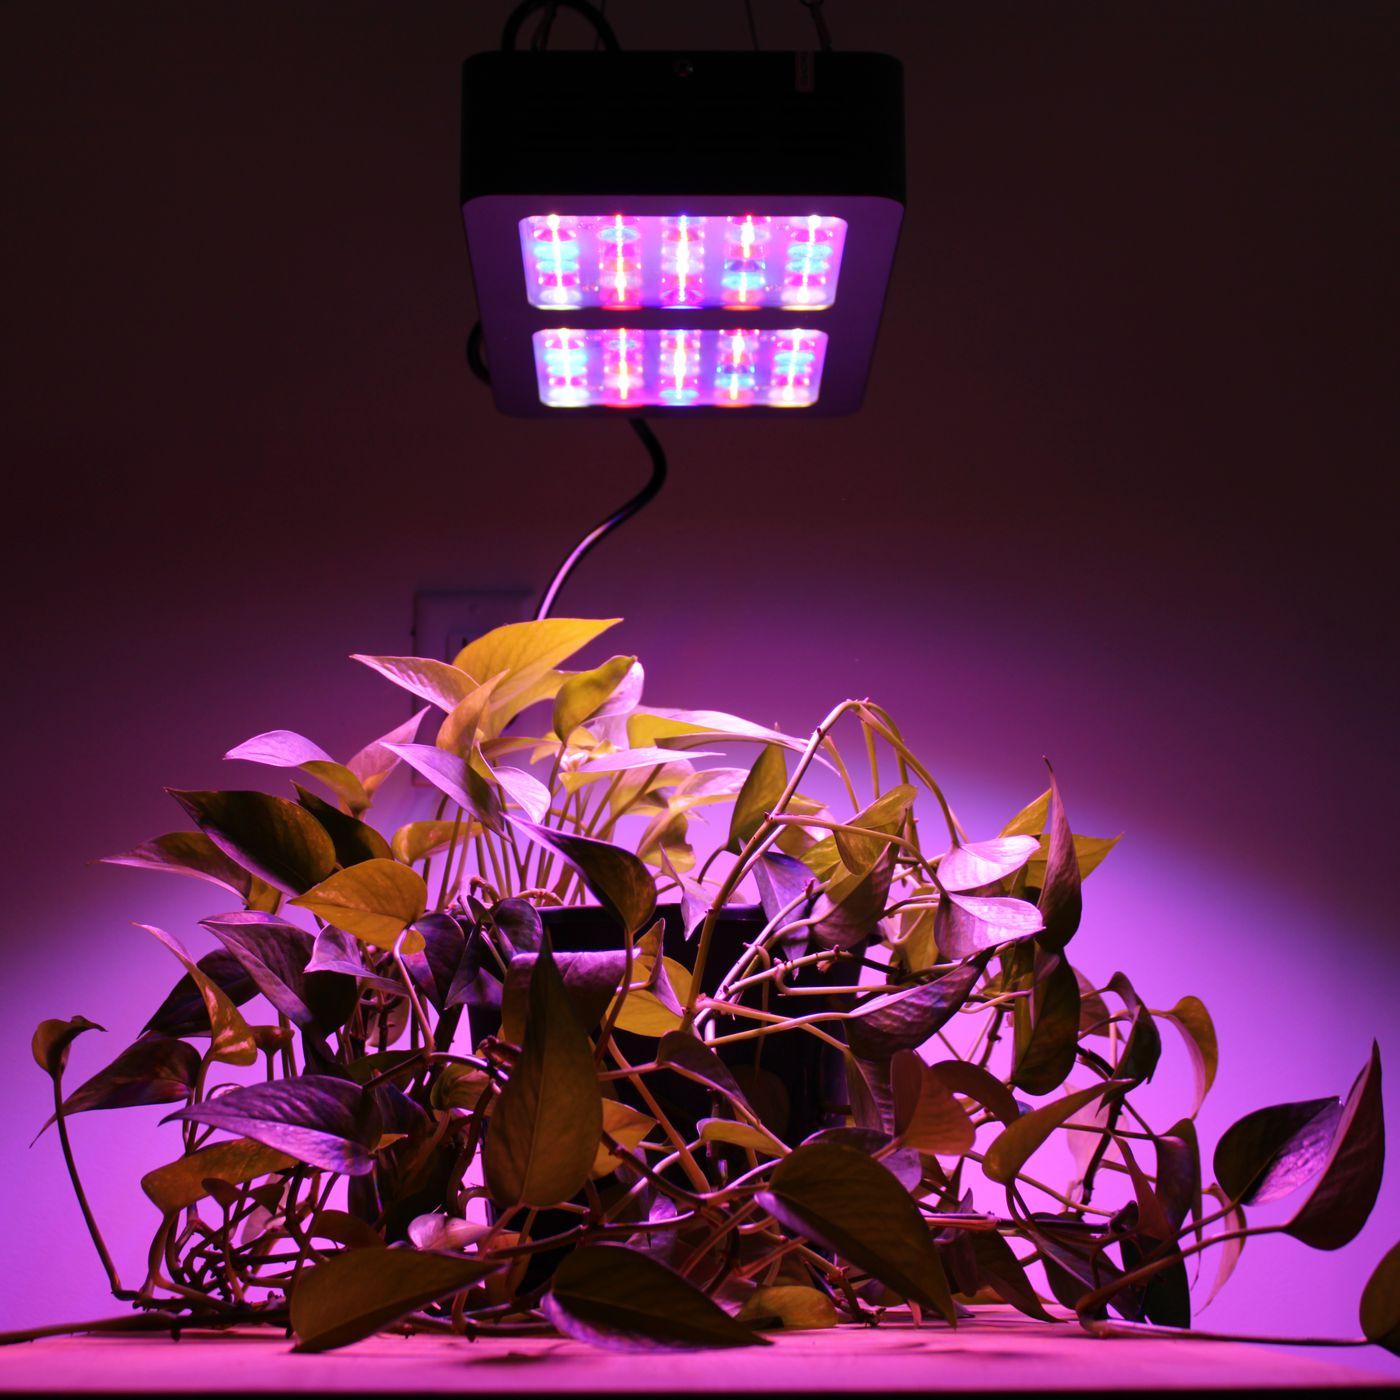 LED Grow lights